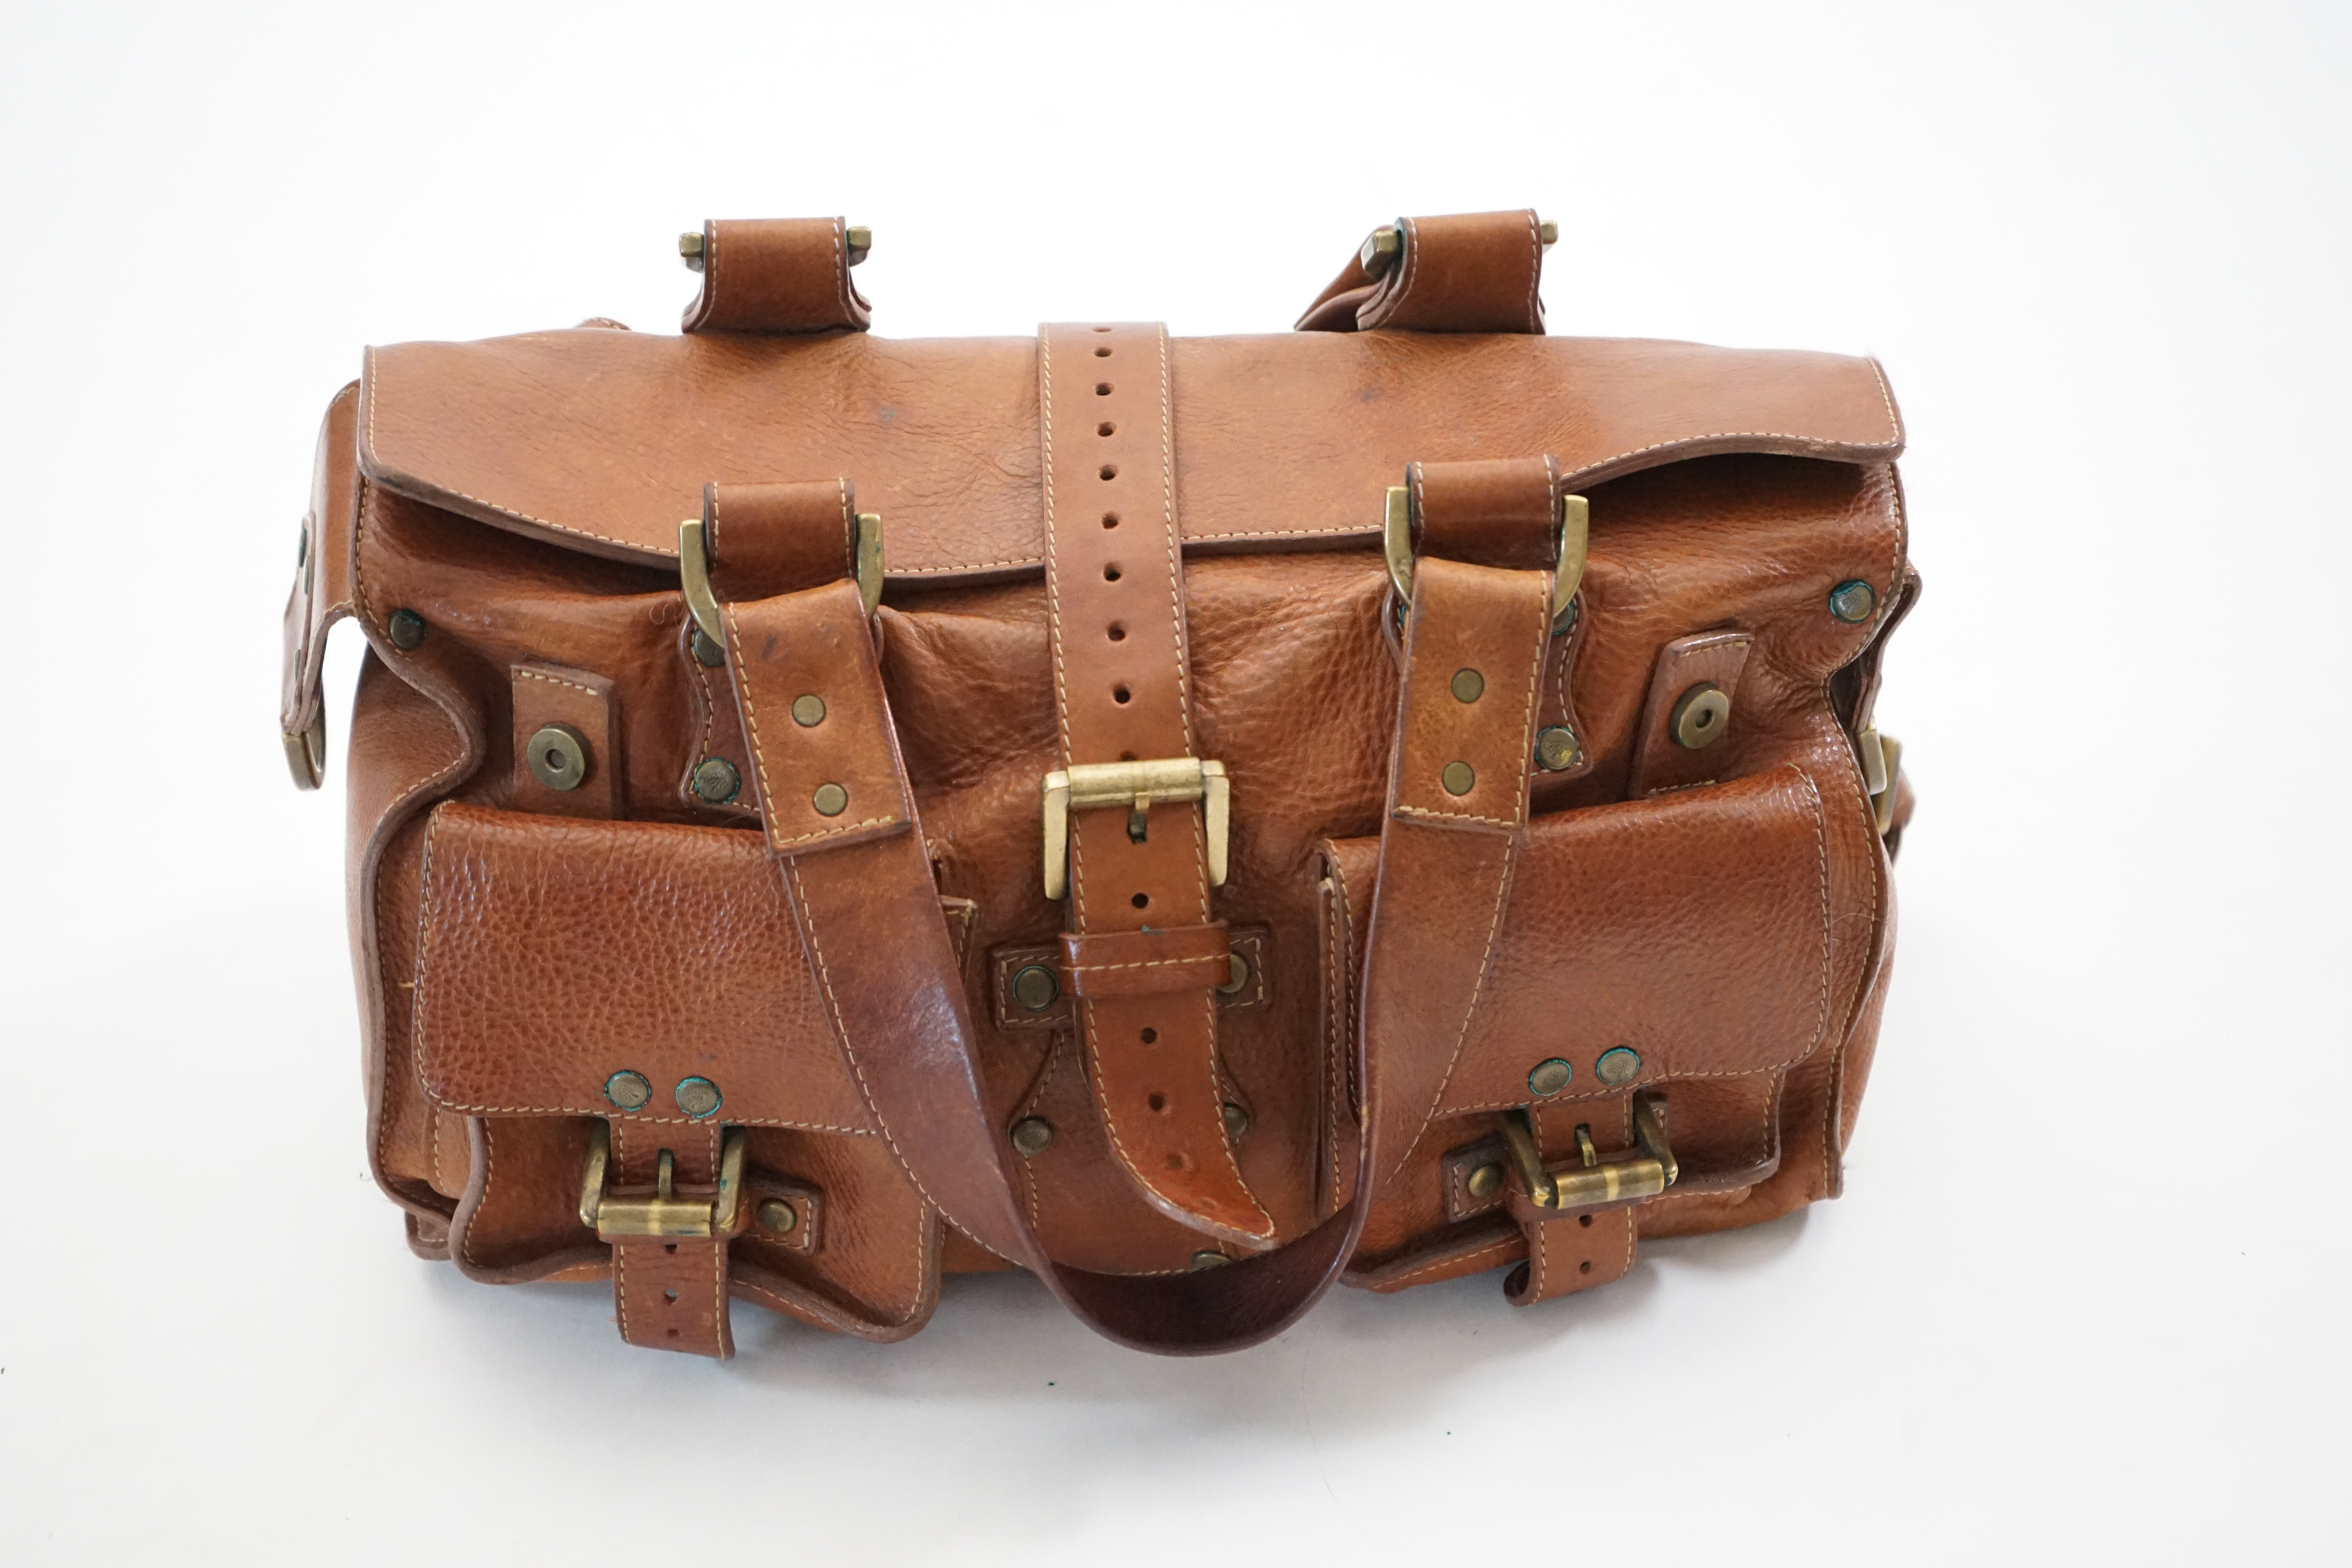 A Mulberry Roxanne cognac brown leather handbag, width 34cm, depth 14cm, height 18cm